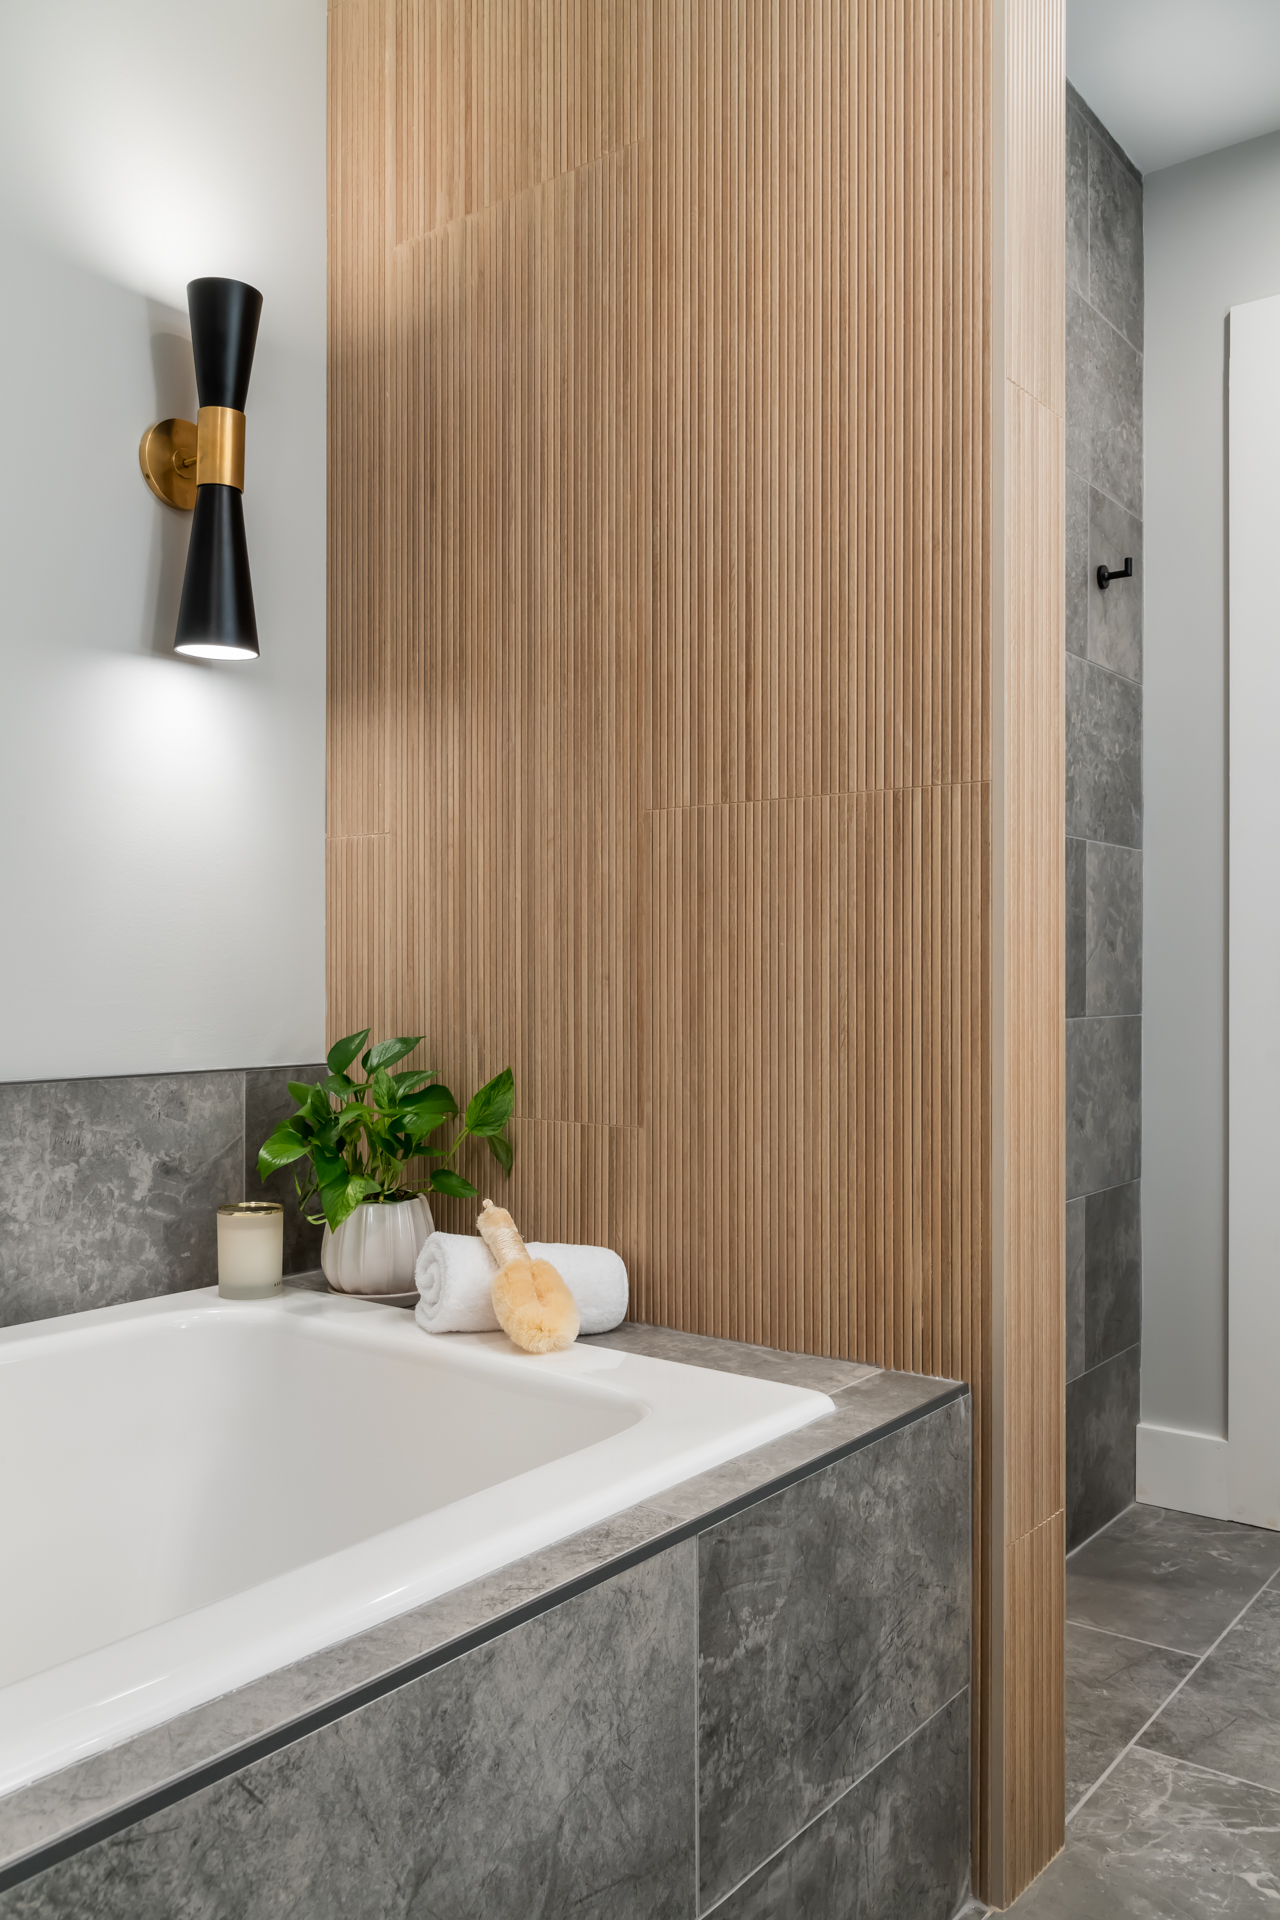 Berkeley Lake, GA bathroom remodel 10 Bathroom Trends for 2023